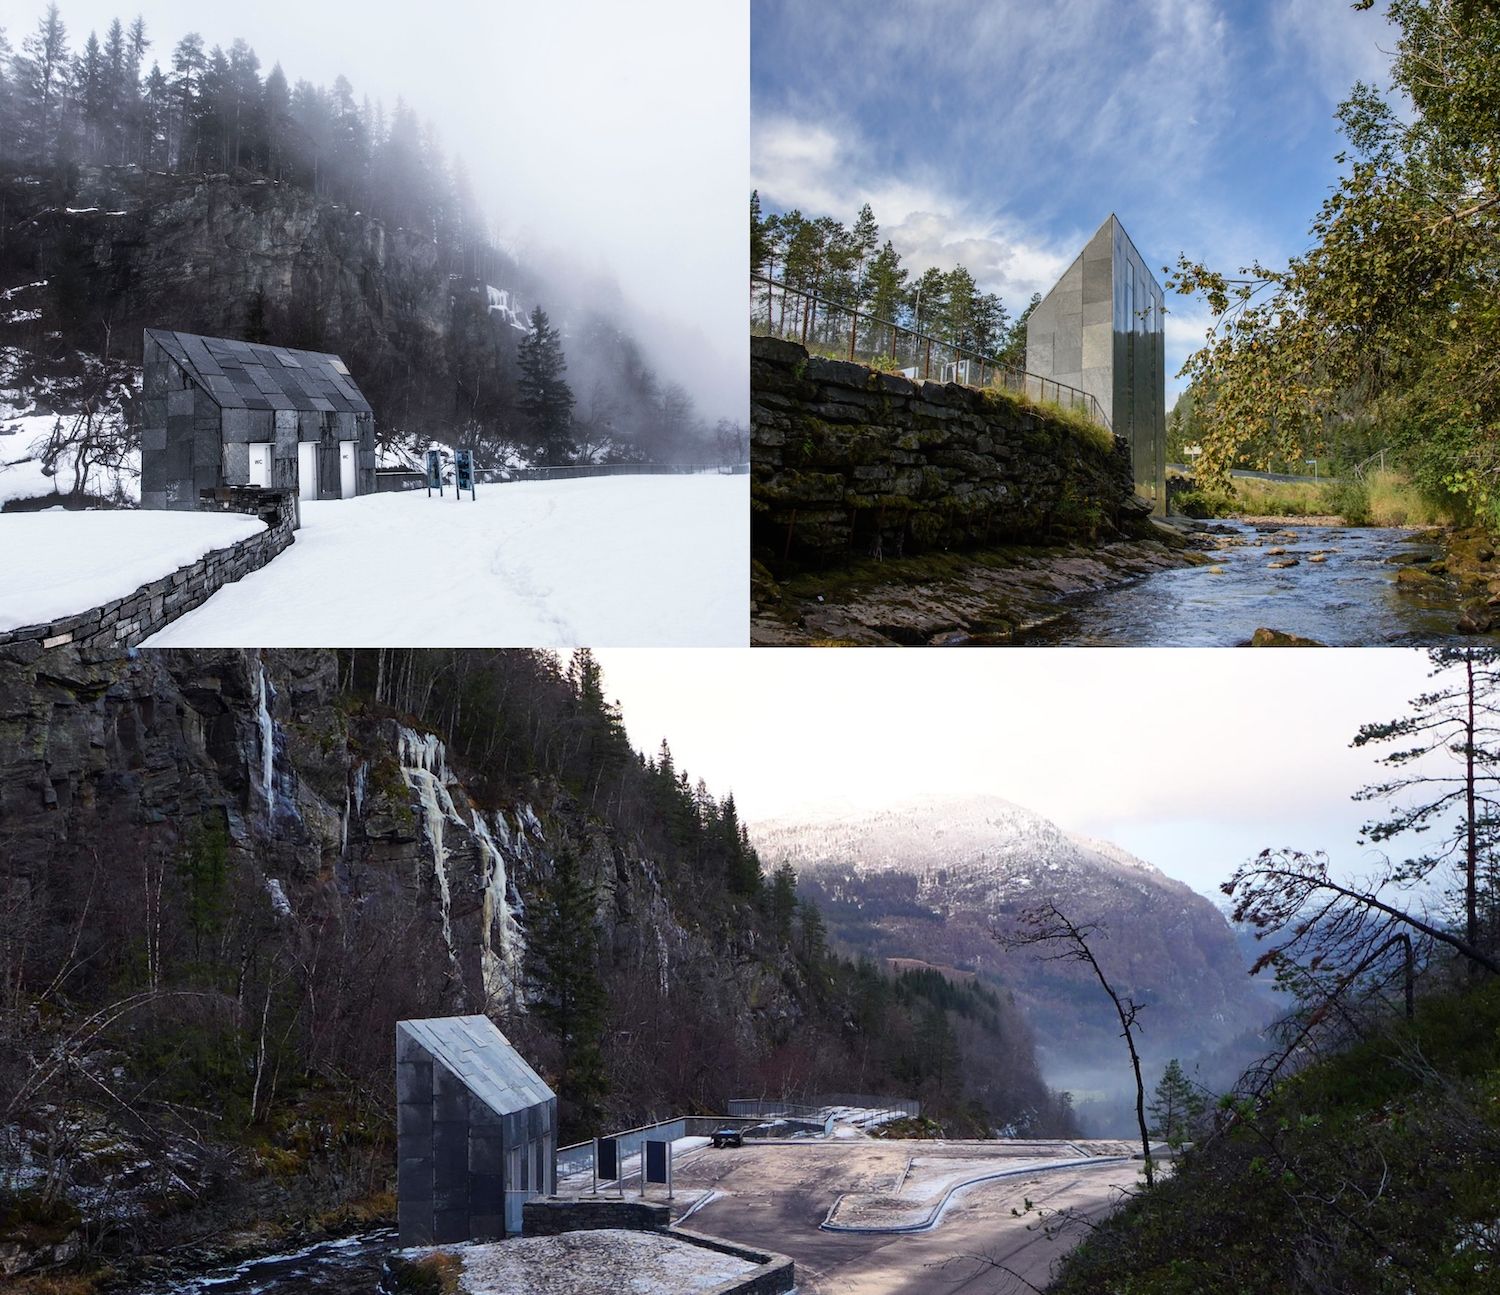 Public toilet at Skjervsfossen waterfall in Norway